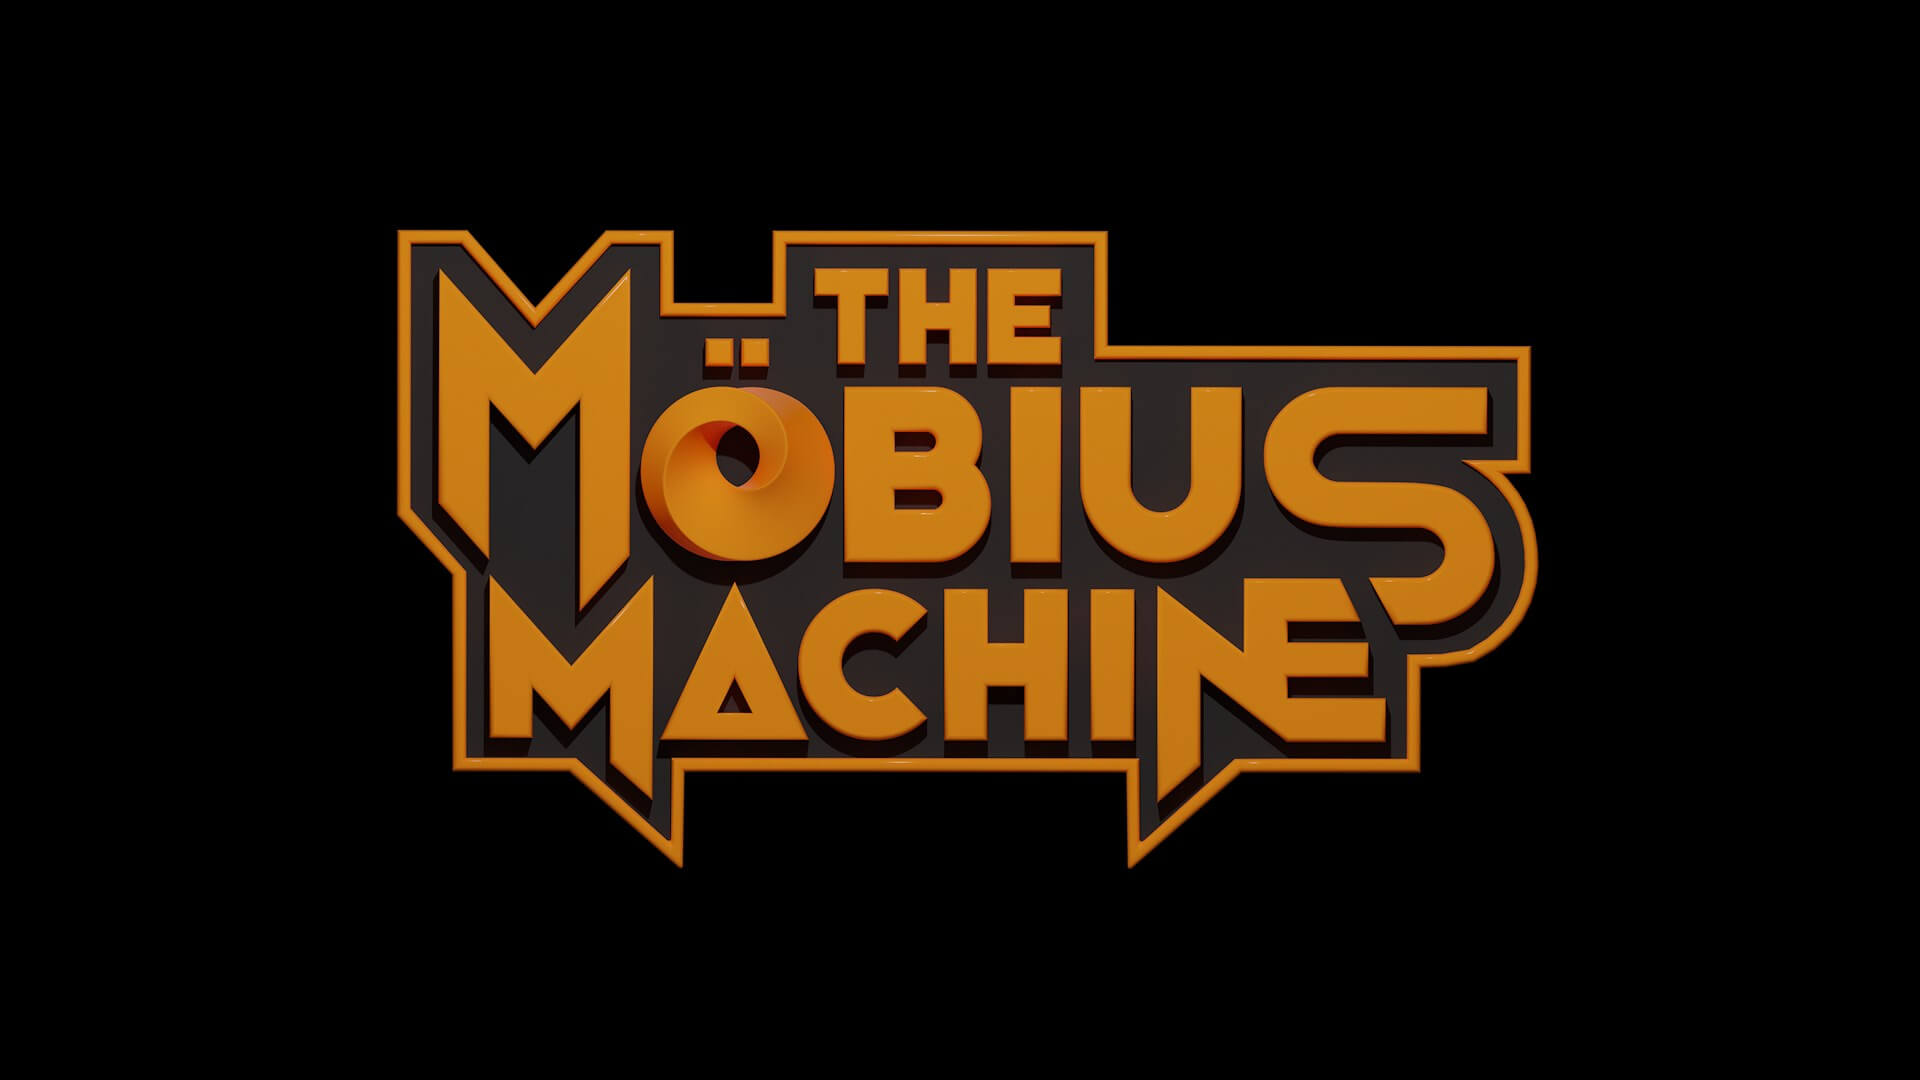 The Möbius Machine Image